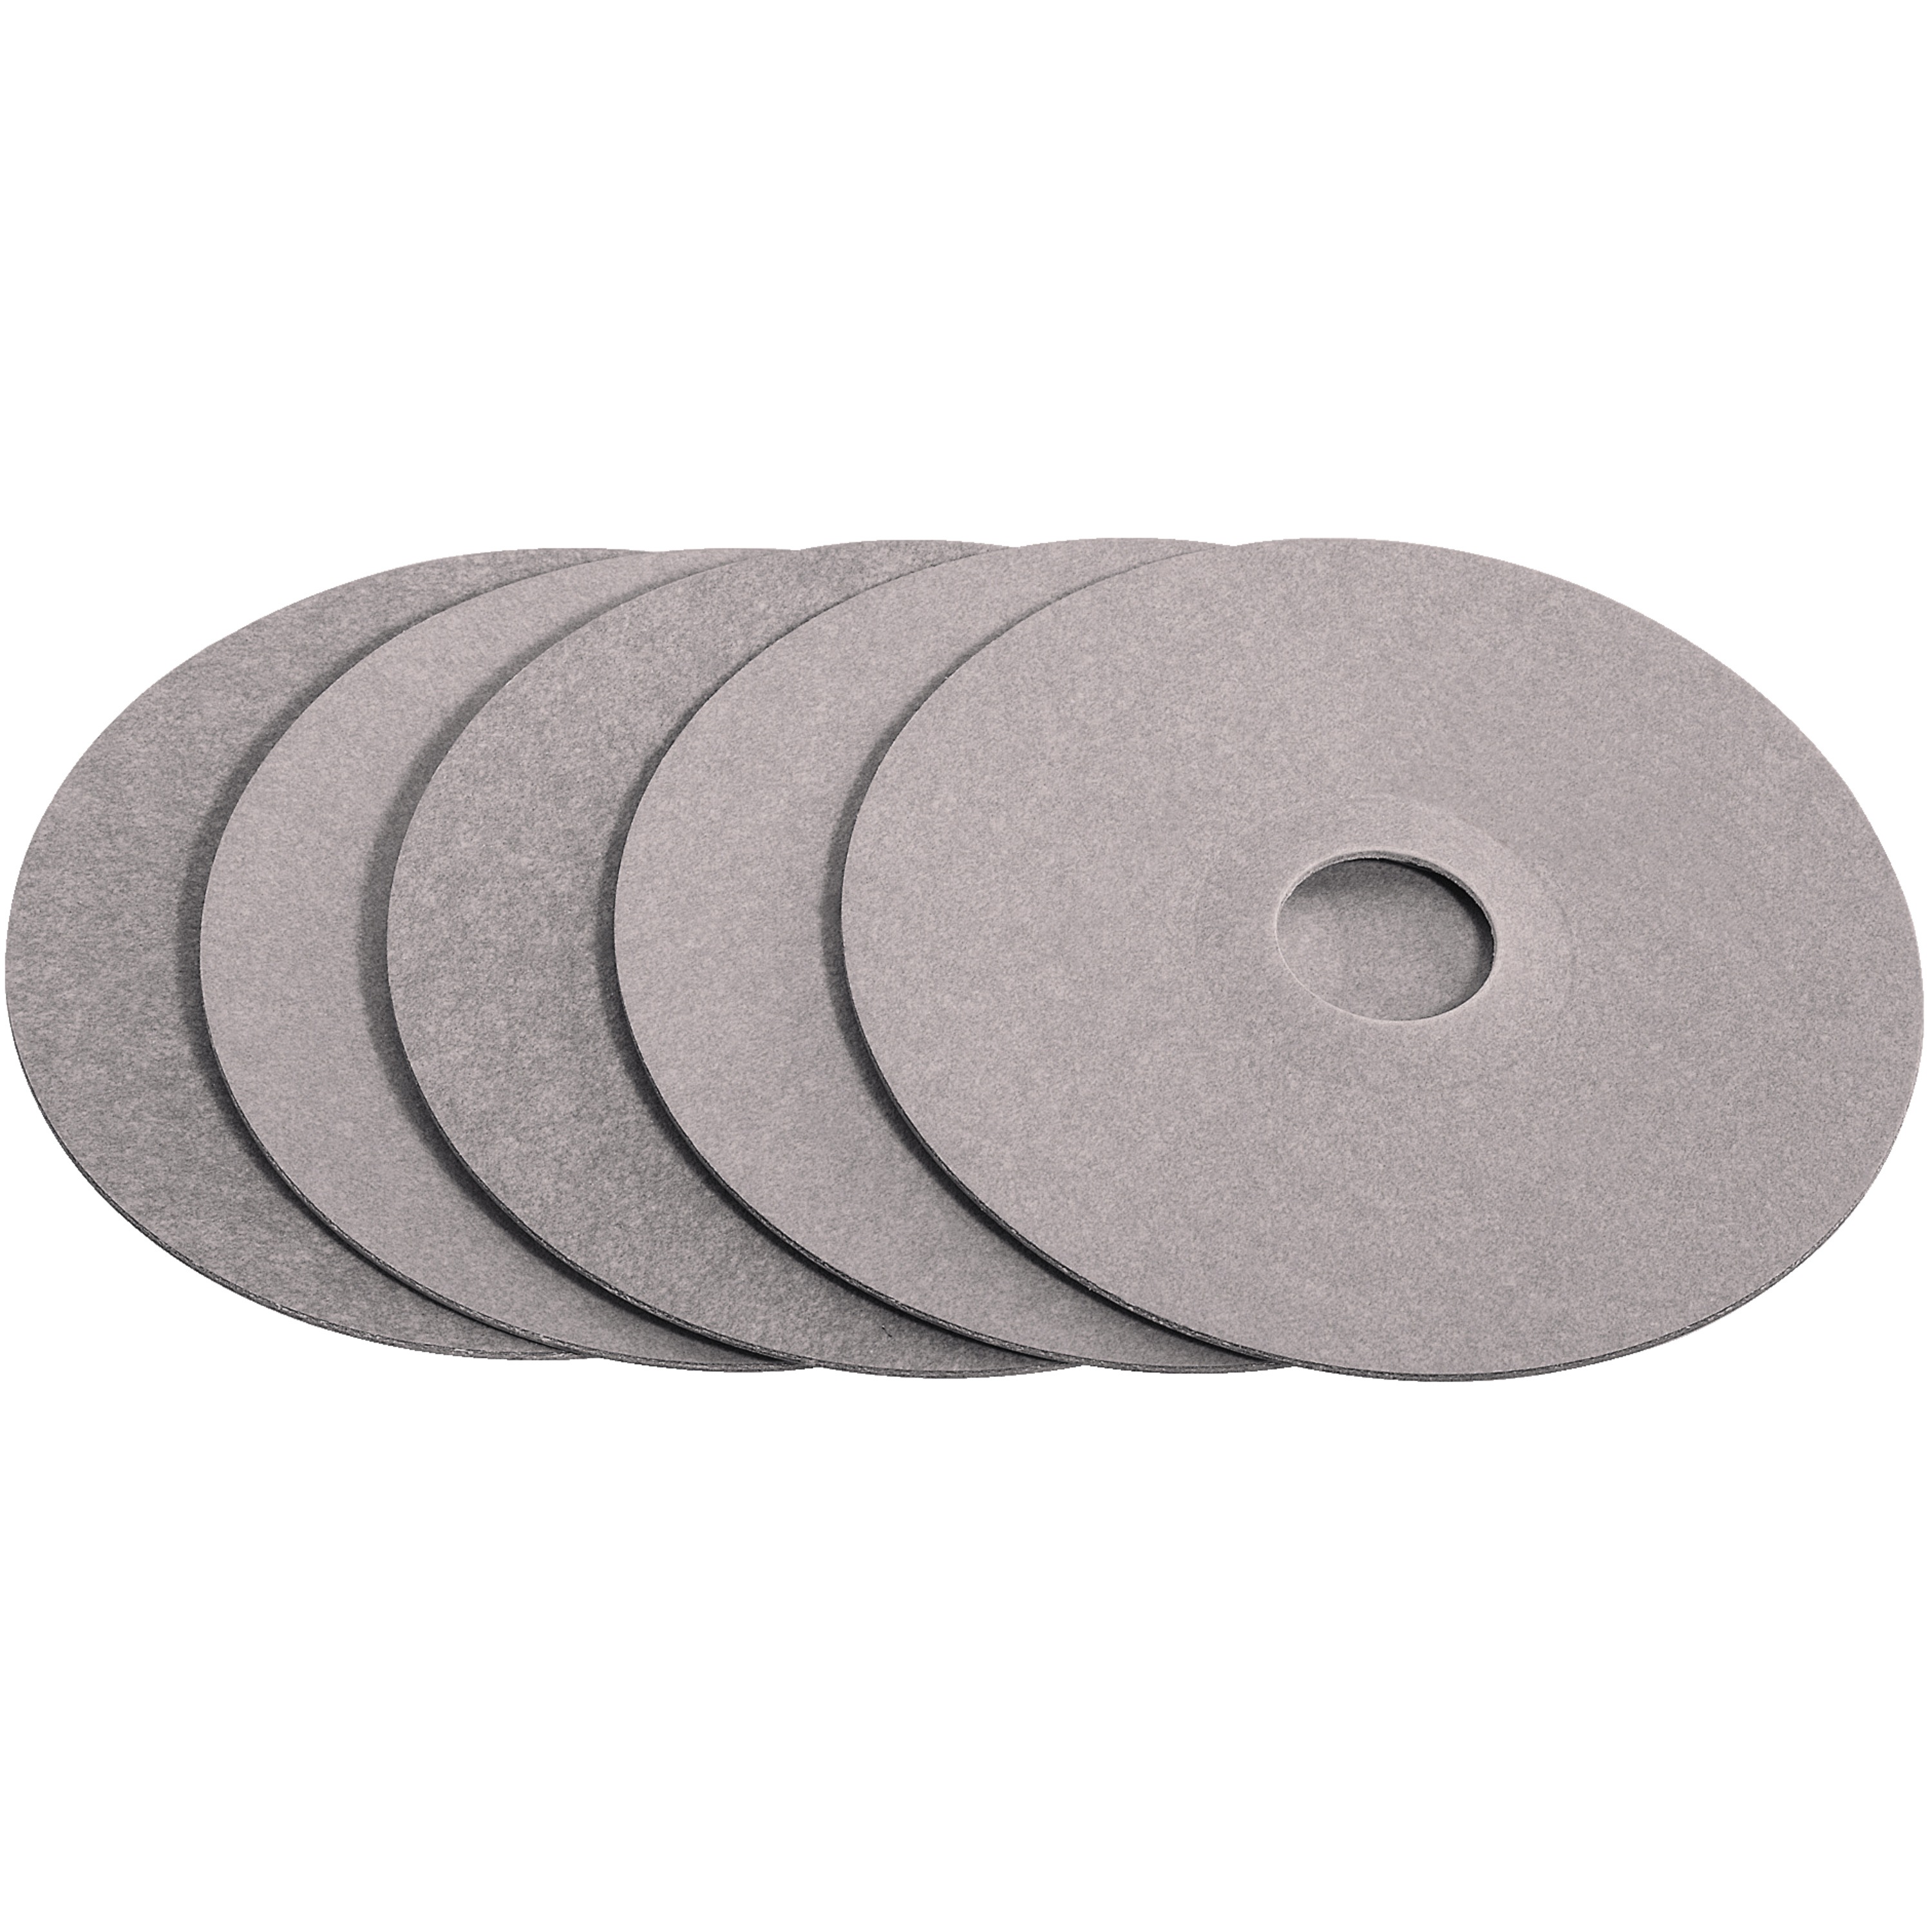 4 inch paper fiber disc backing pads.